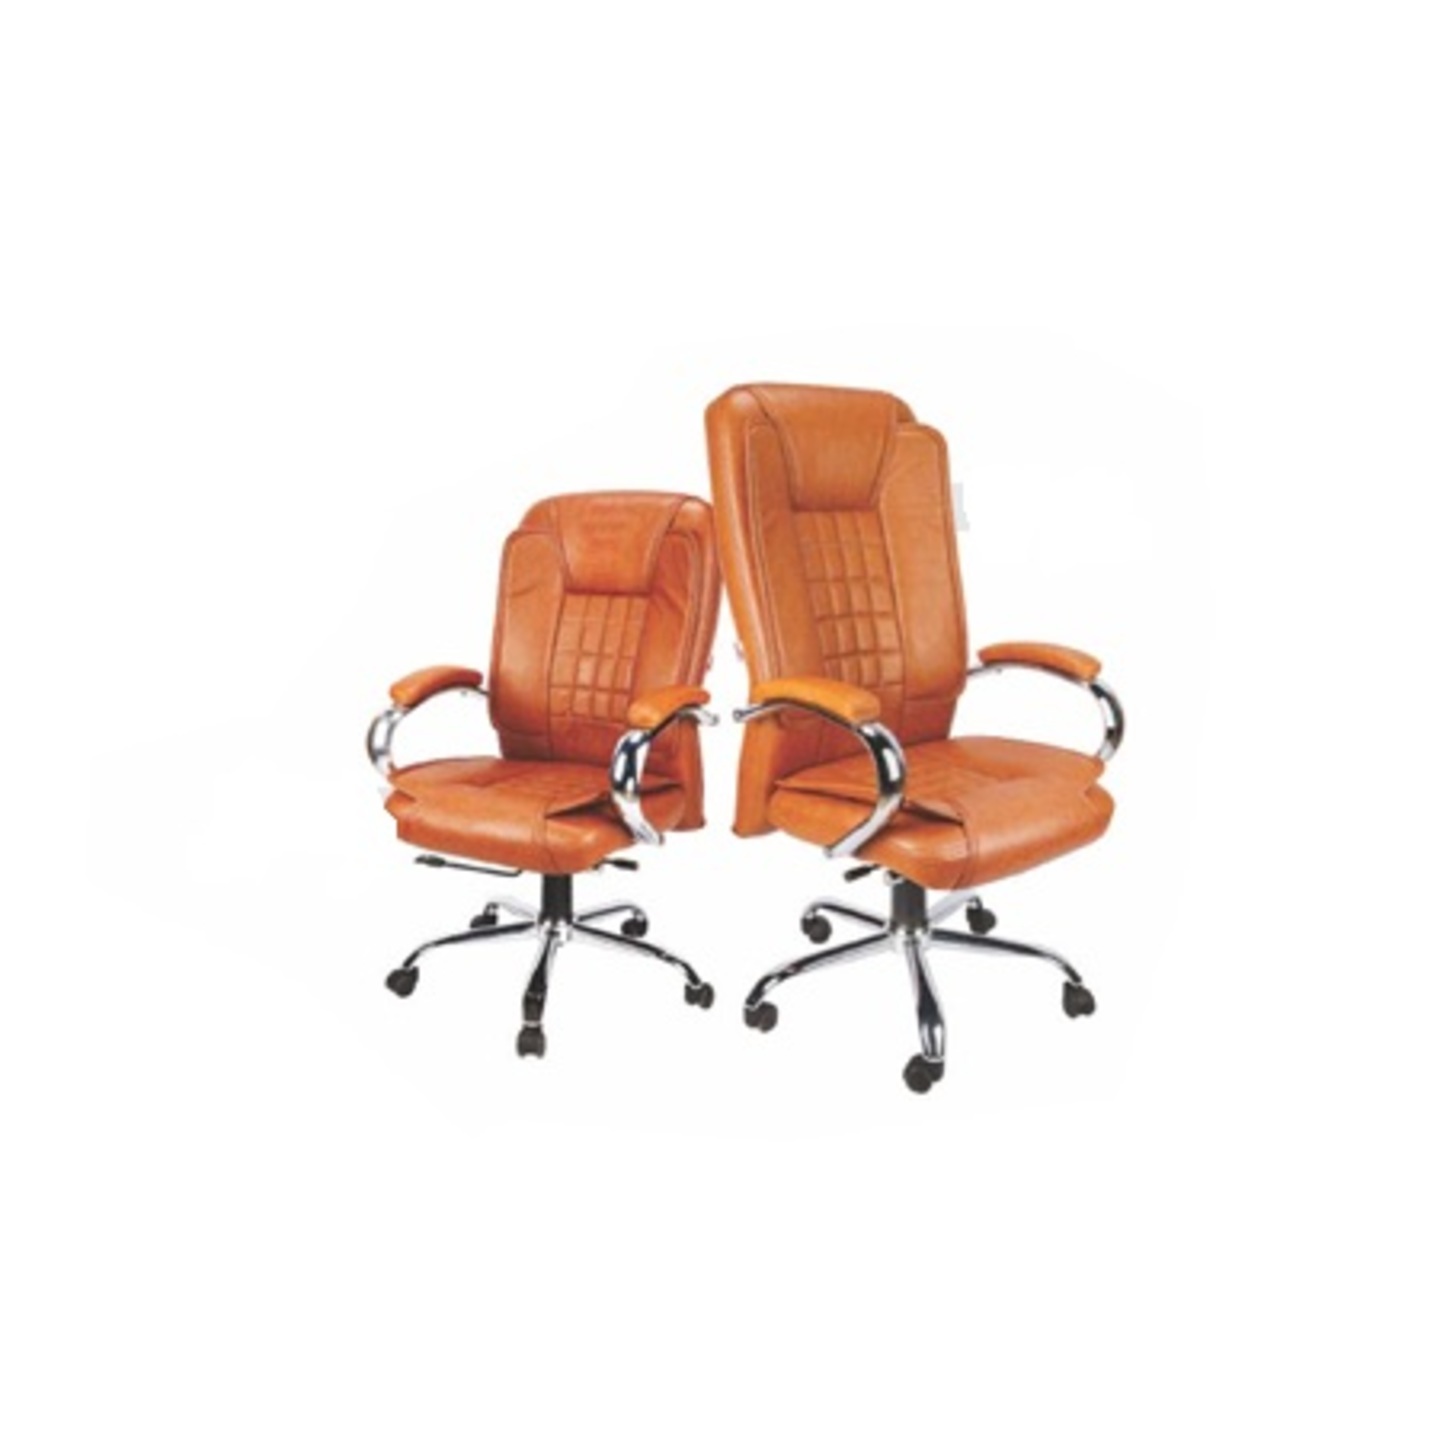 PI High Back Chair Venue In Brown Colour